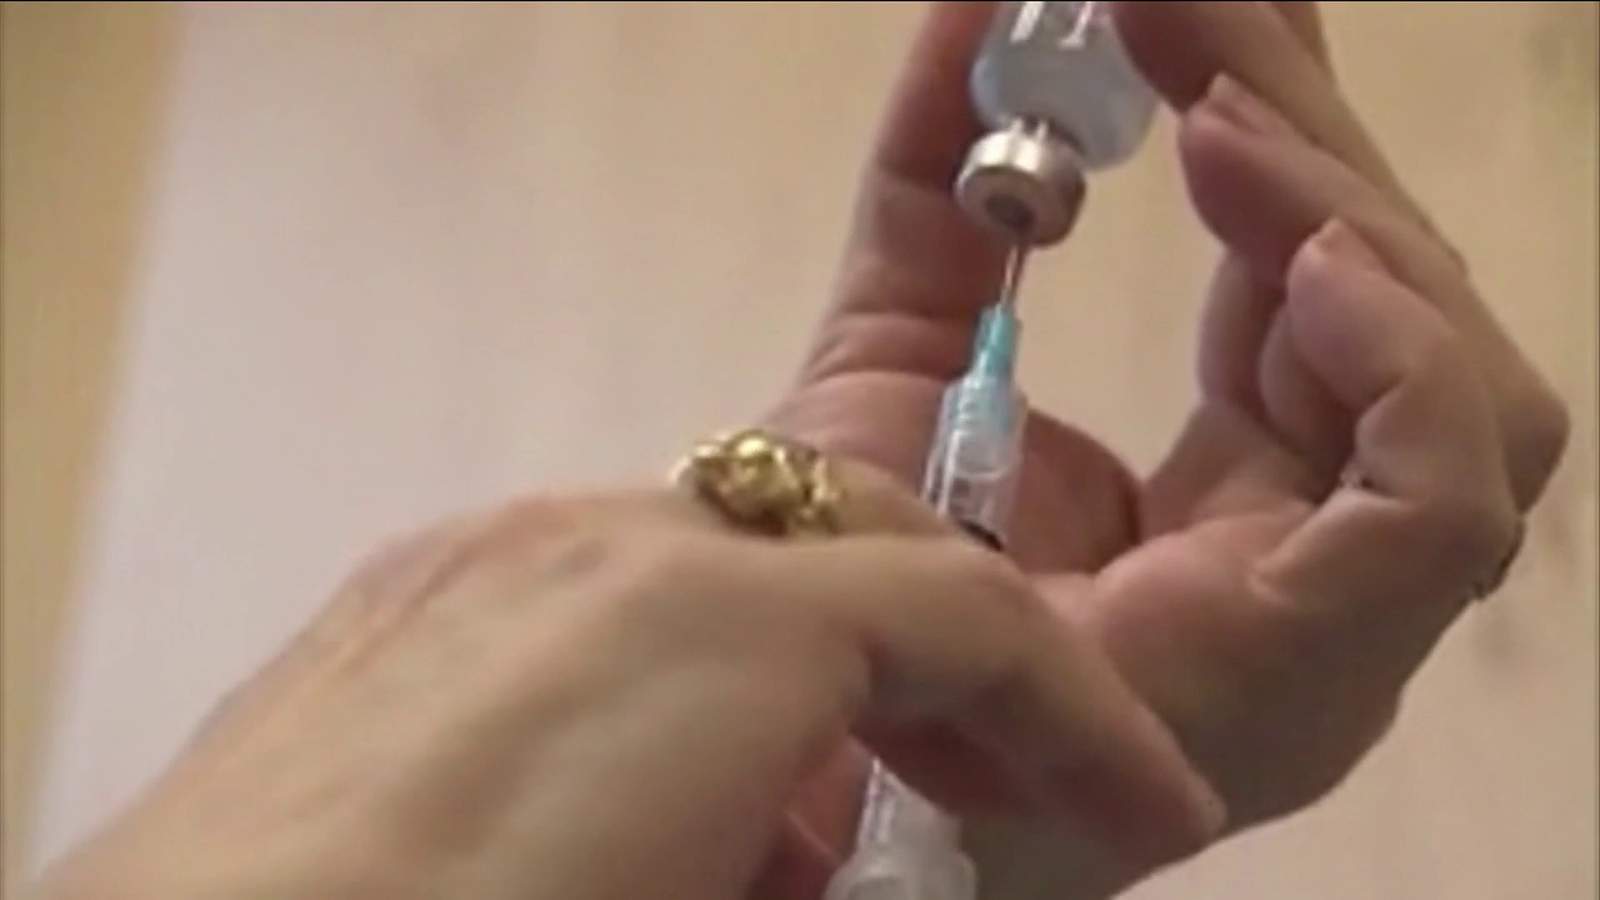 Jacksonville hospitals prepare for influx of flu patients